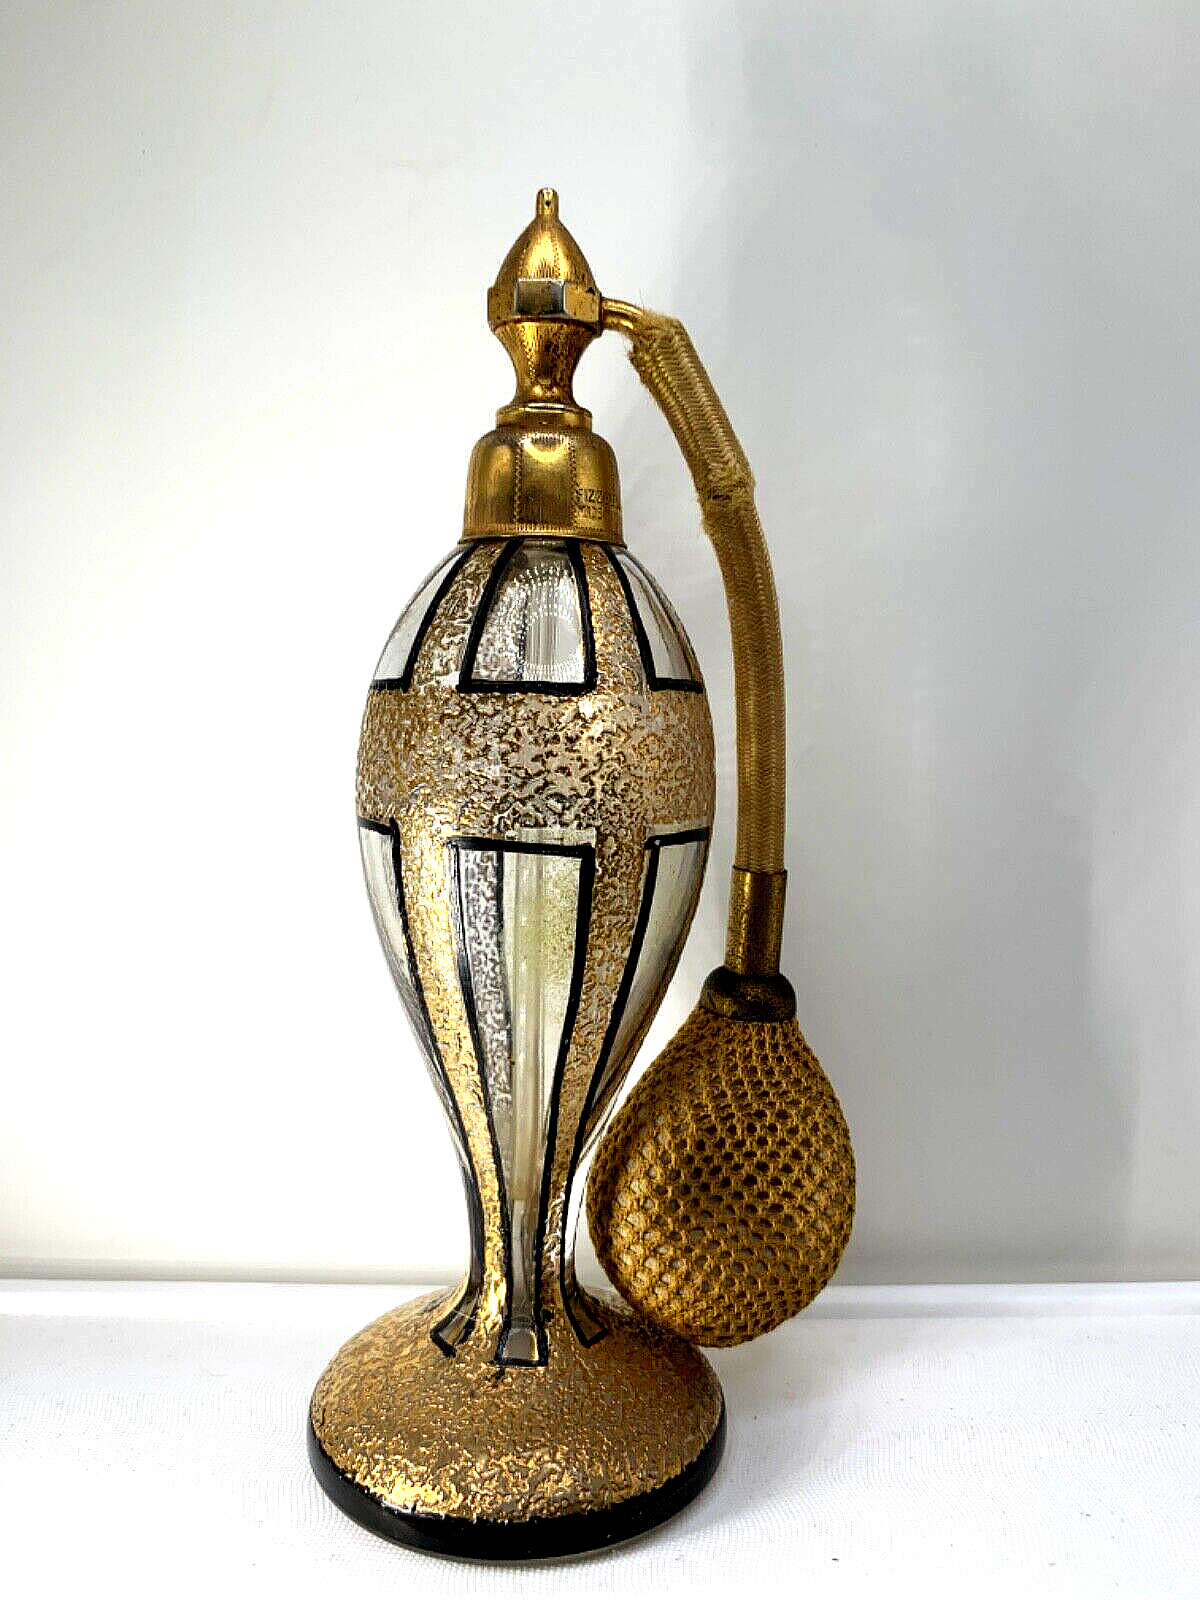 DeVilbiss windowpane gilded perfume bottle w/Marcel Franck fizz atomizer mount.